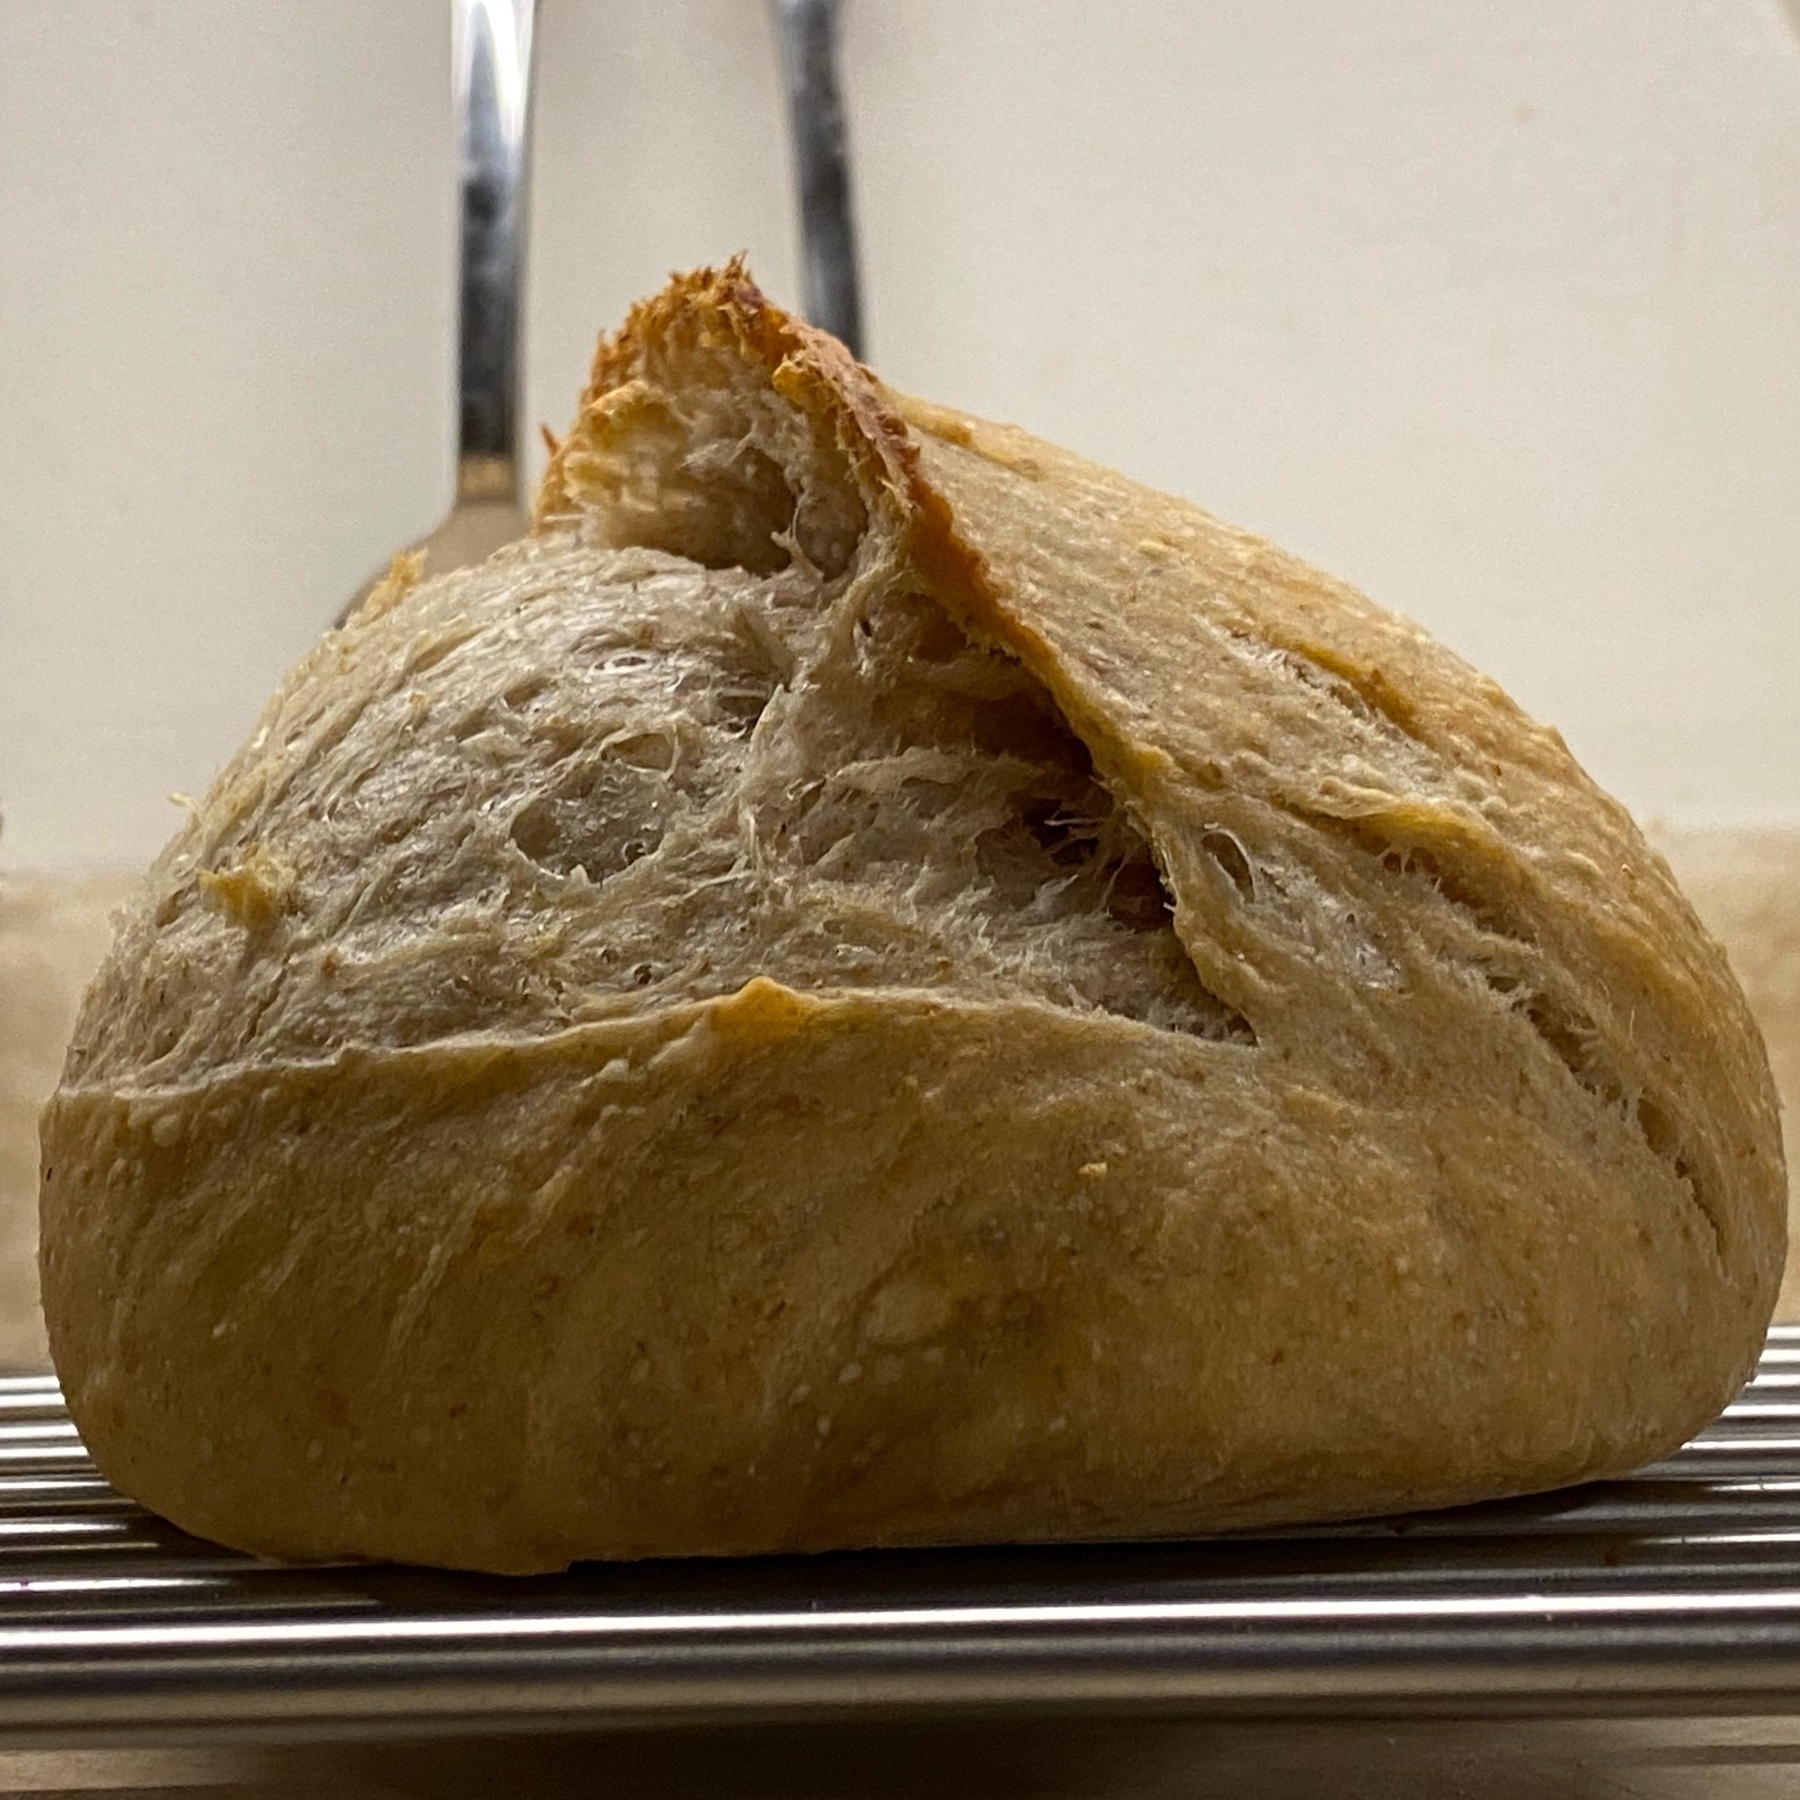 Sourdough loaf from side cooling on rack.